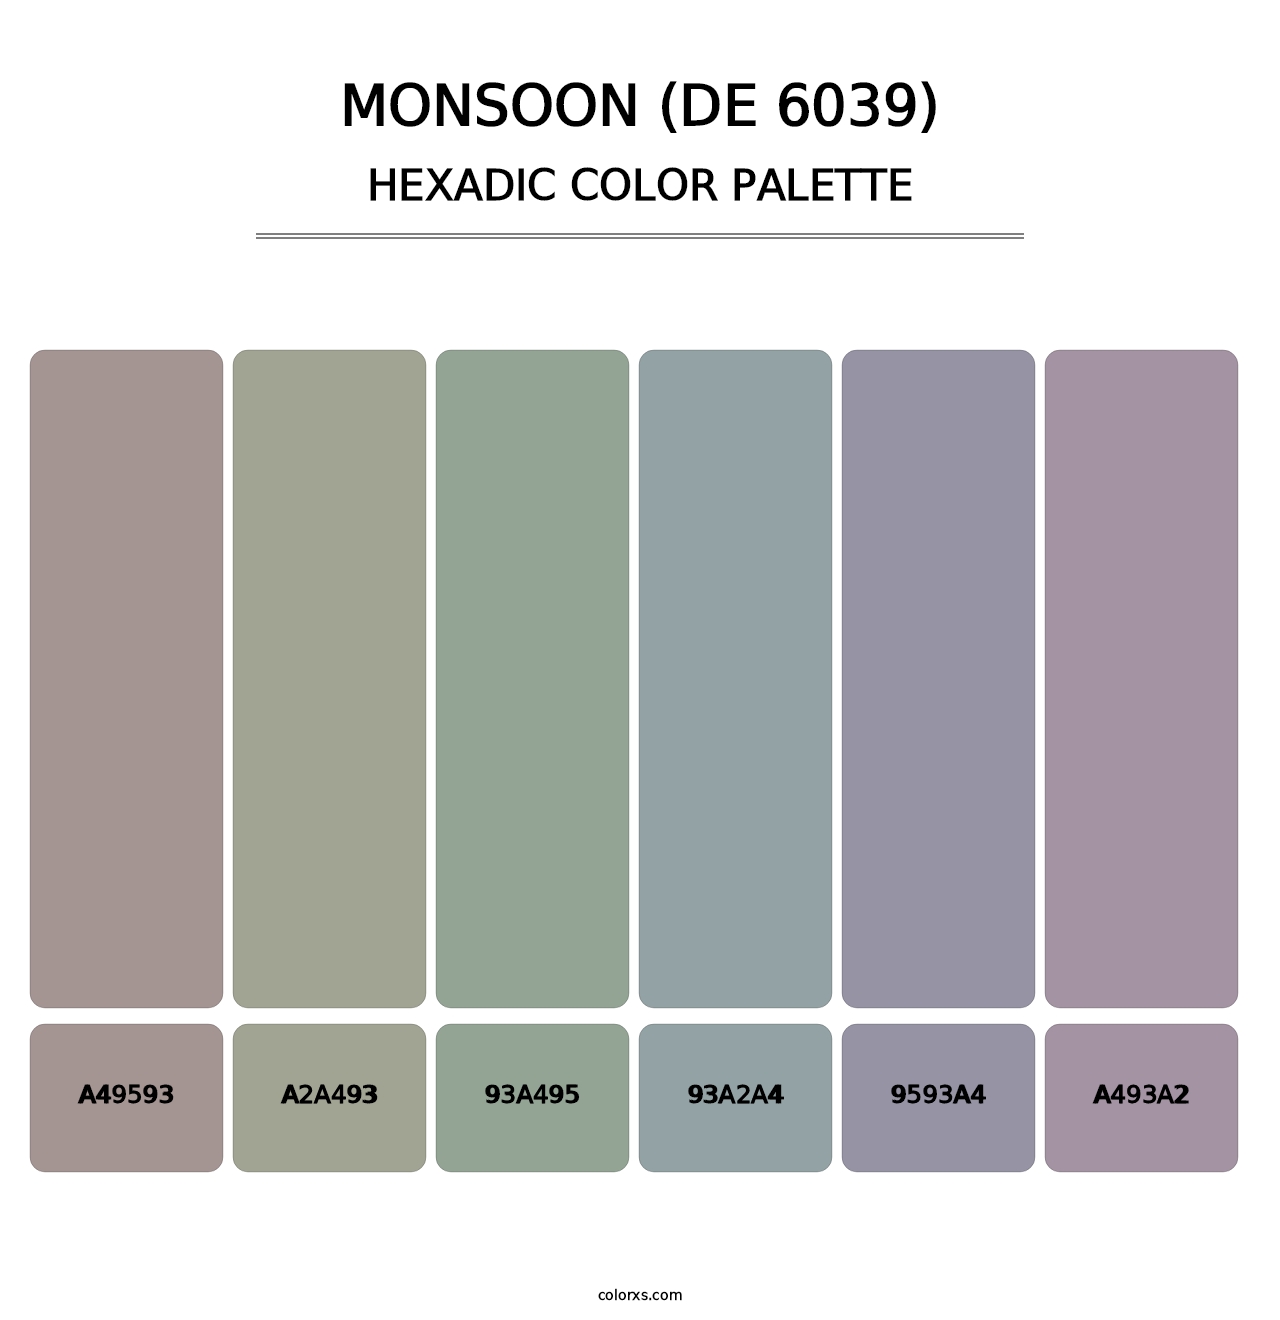 Monsoon (DE 6039) - Hexadic Color Palette